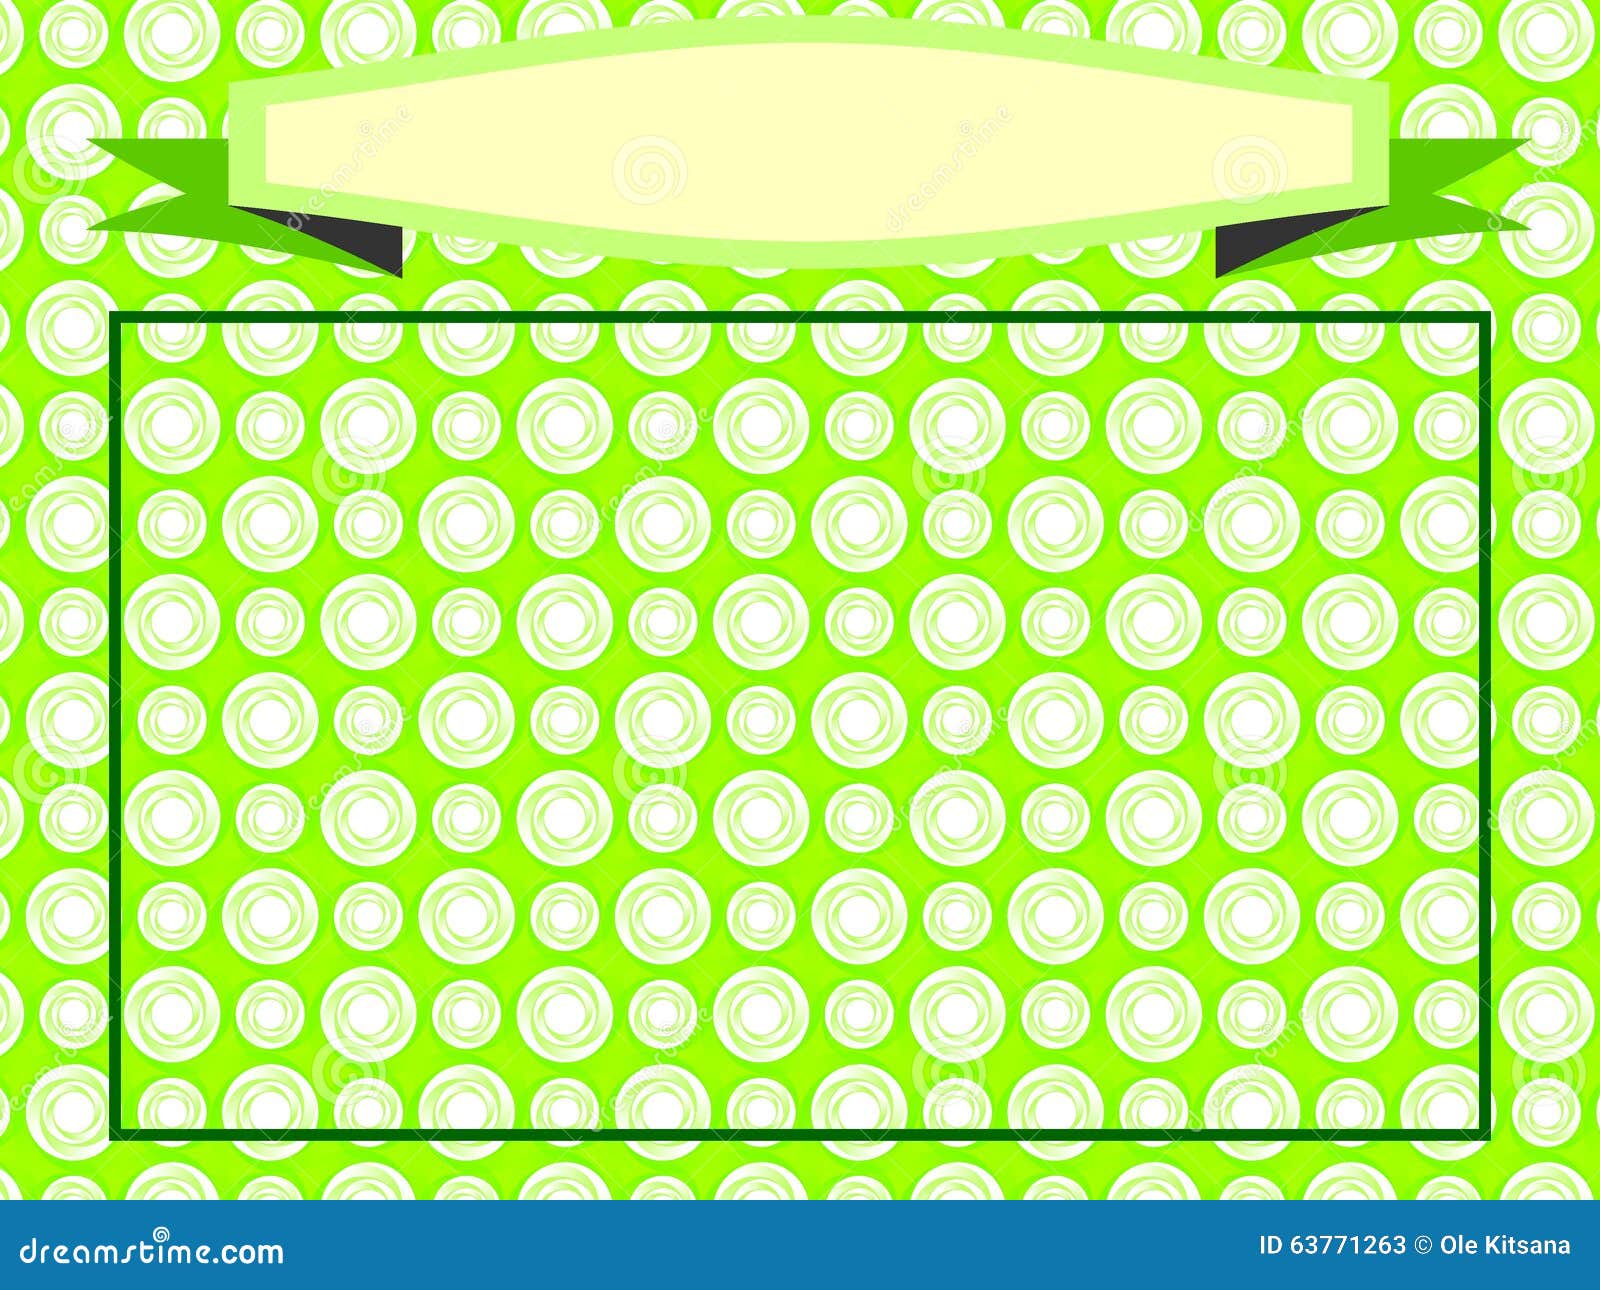 Crystal On Green Background Stock Illustration - Illustration of